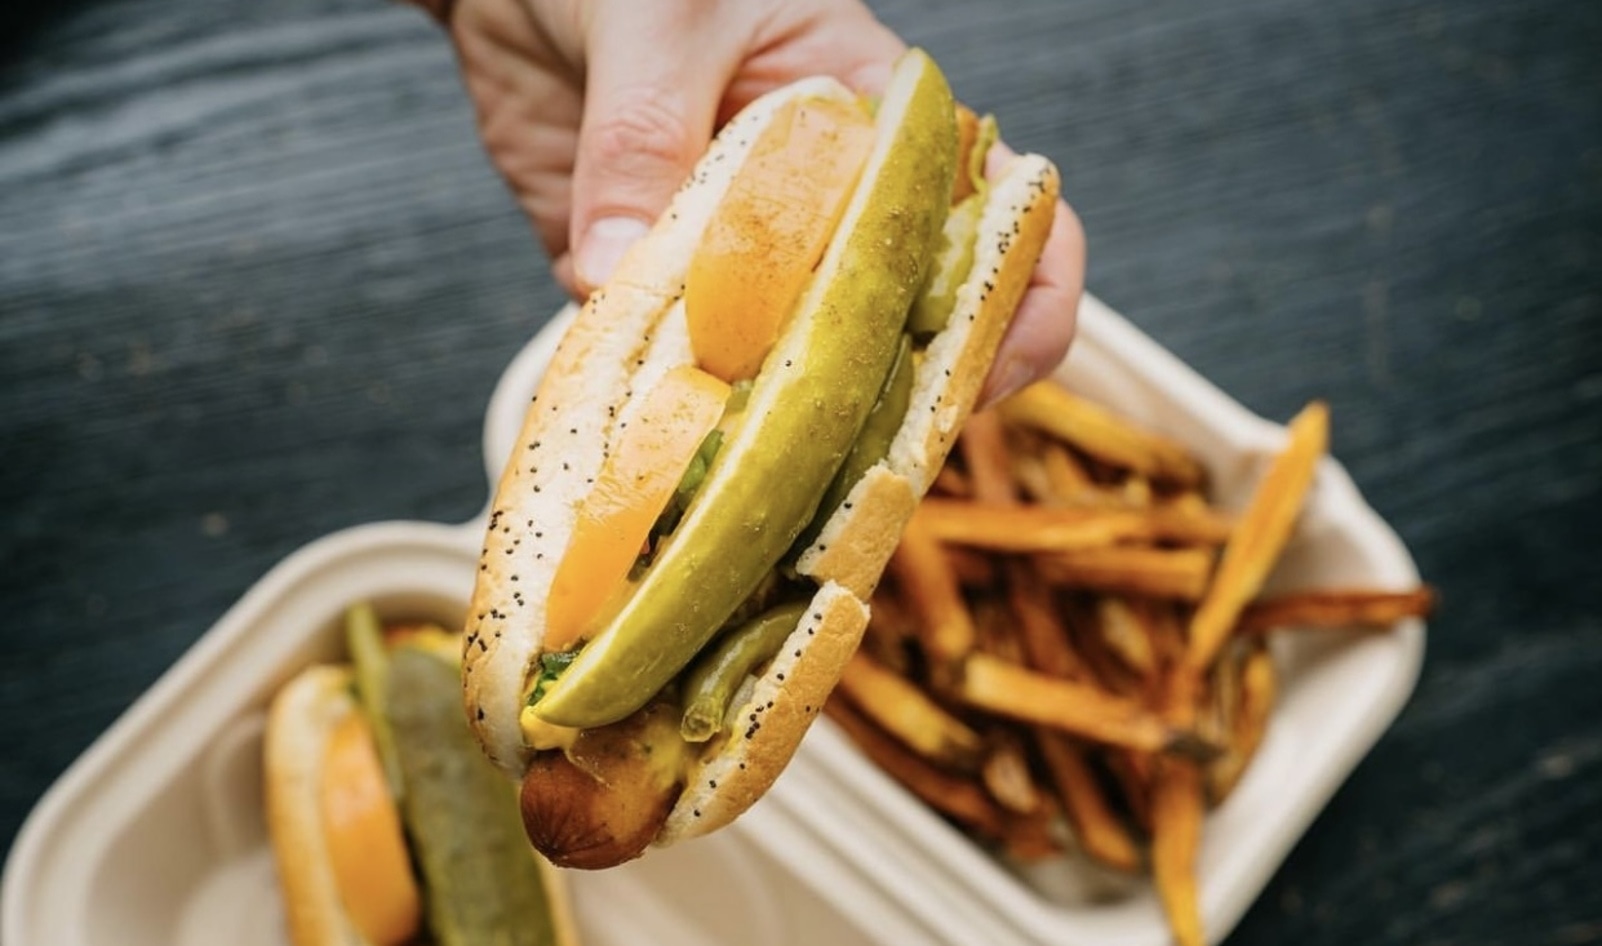 SNEAK PEEK! Chicago's First Vegan Food Hall Just Announced Its Six Restaurants